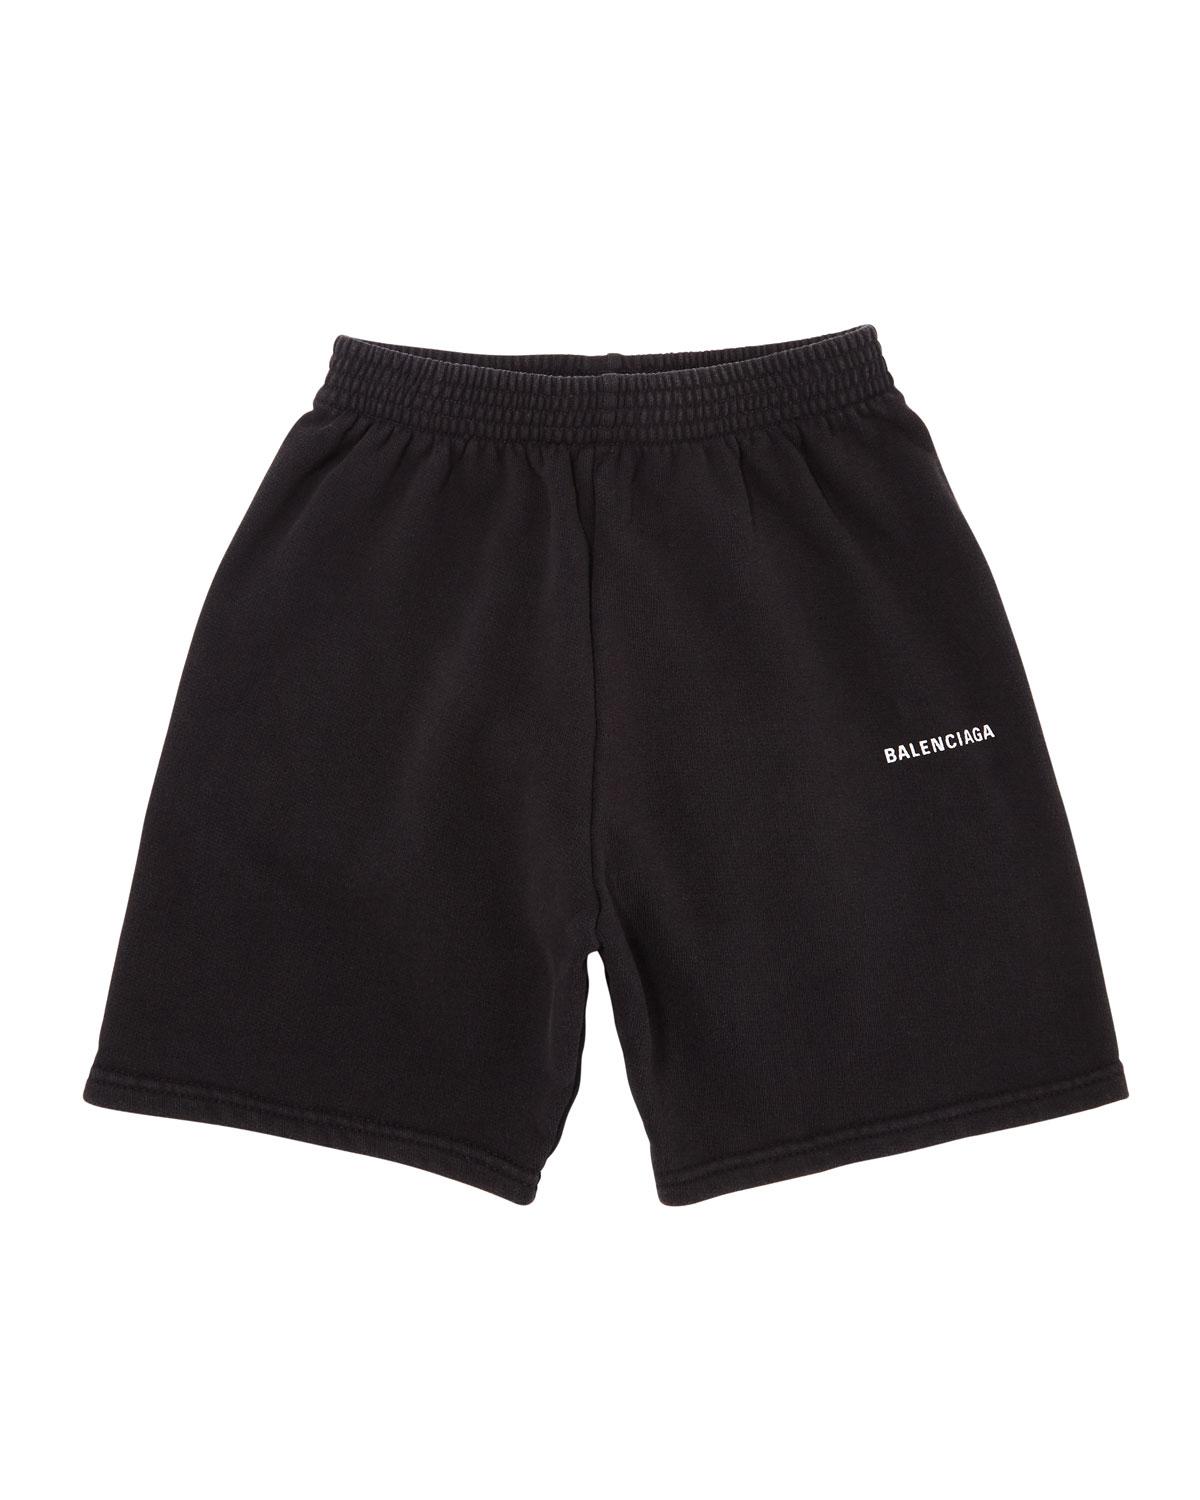 Balenciaga Cotton Kid's Jogging Shorts in Black for Men - Lyst